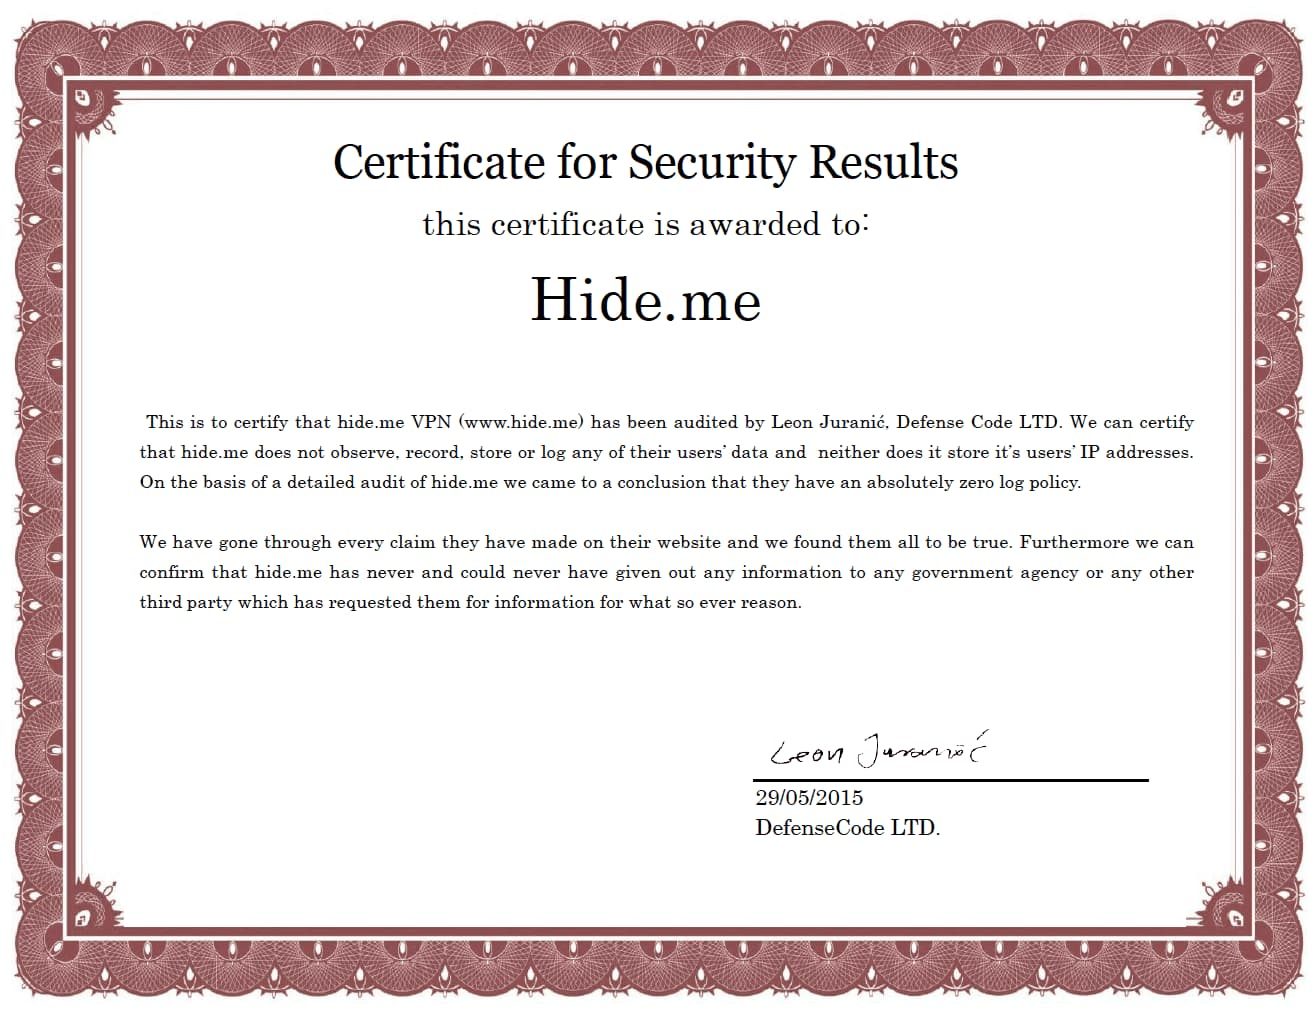 hide-me-audit-certificate-granted-by-defensecode-ltd-3348338